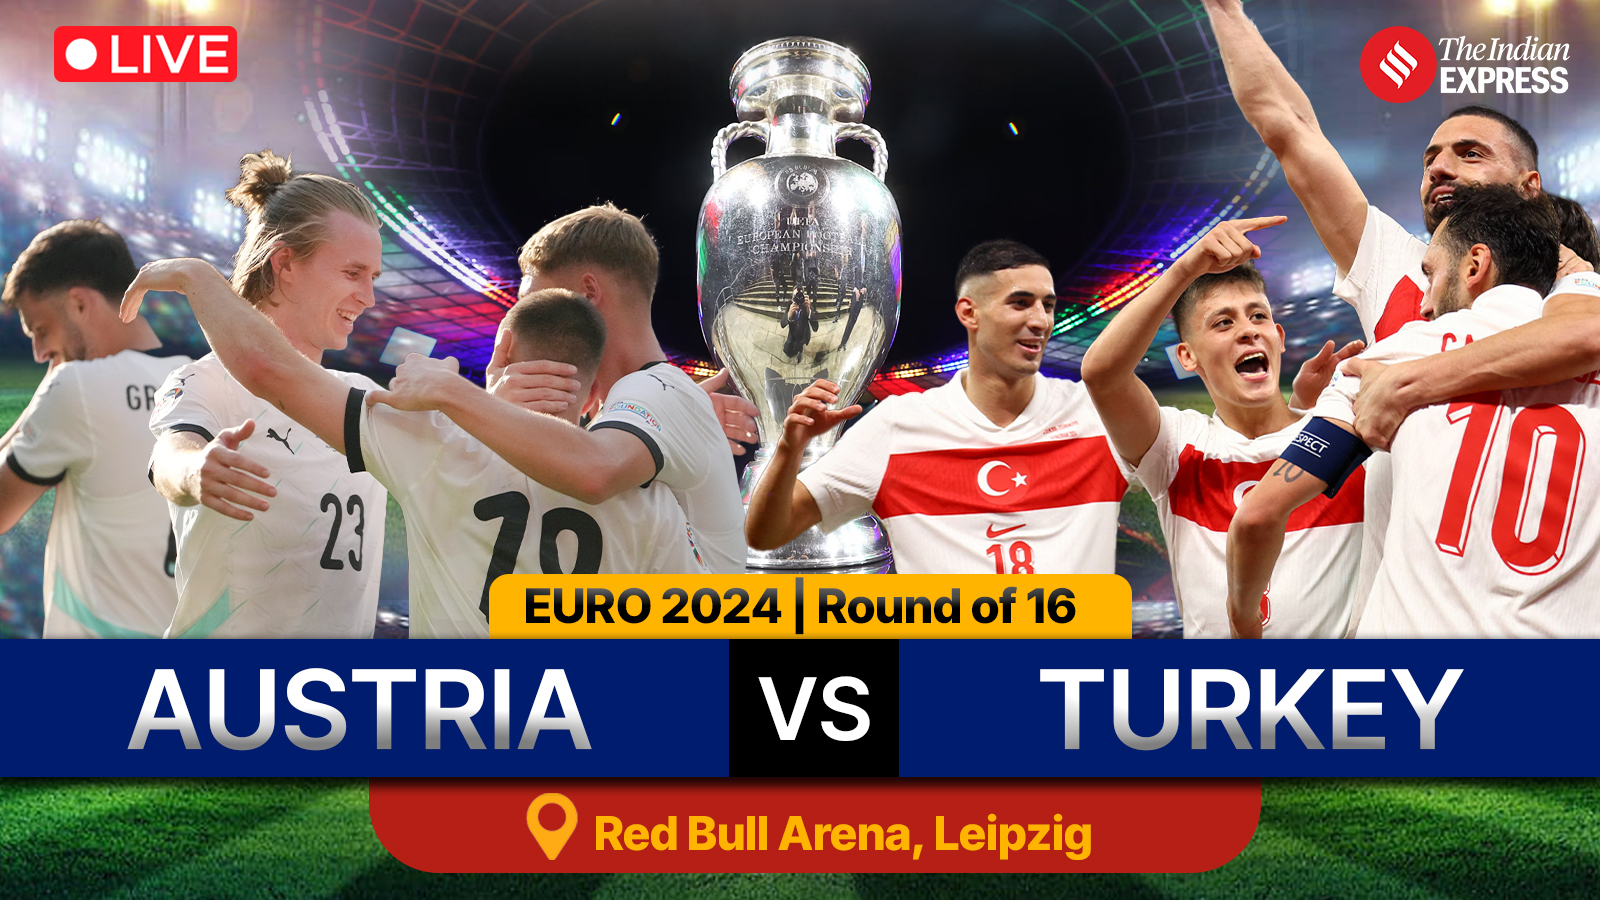 Austria vs Turkey, EURO 2024 live score: Austria to play Turkey for last quarter-final spot, starting XI announced | Football news